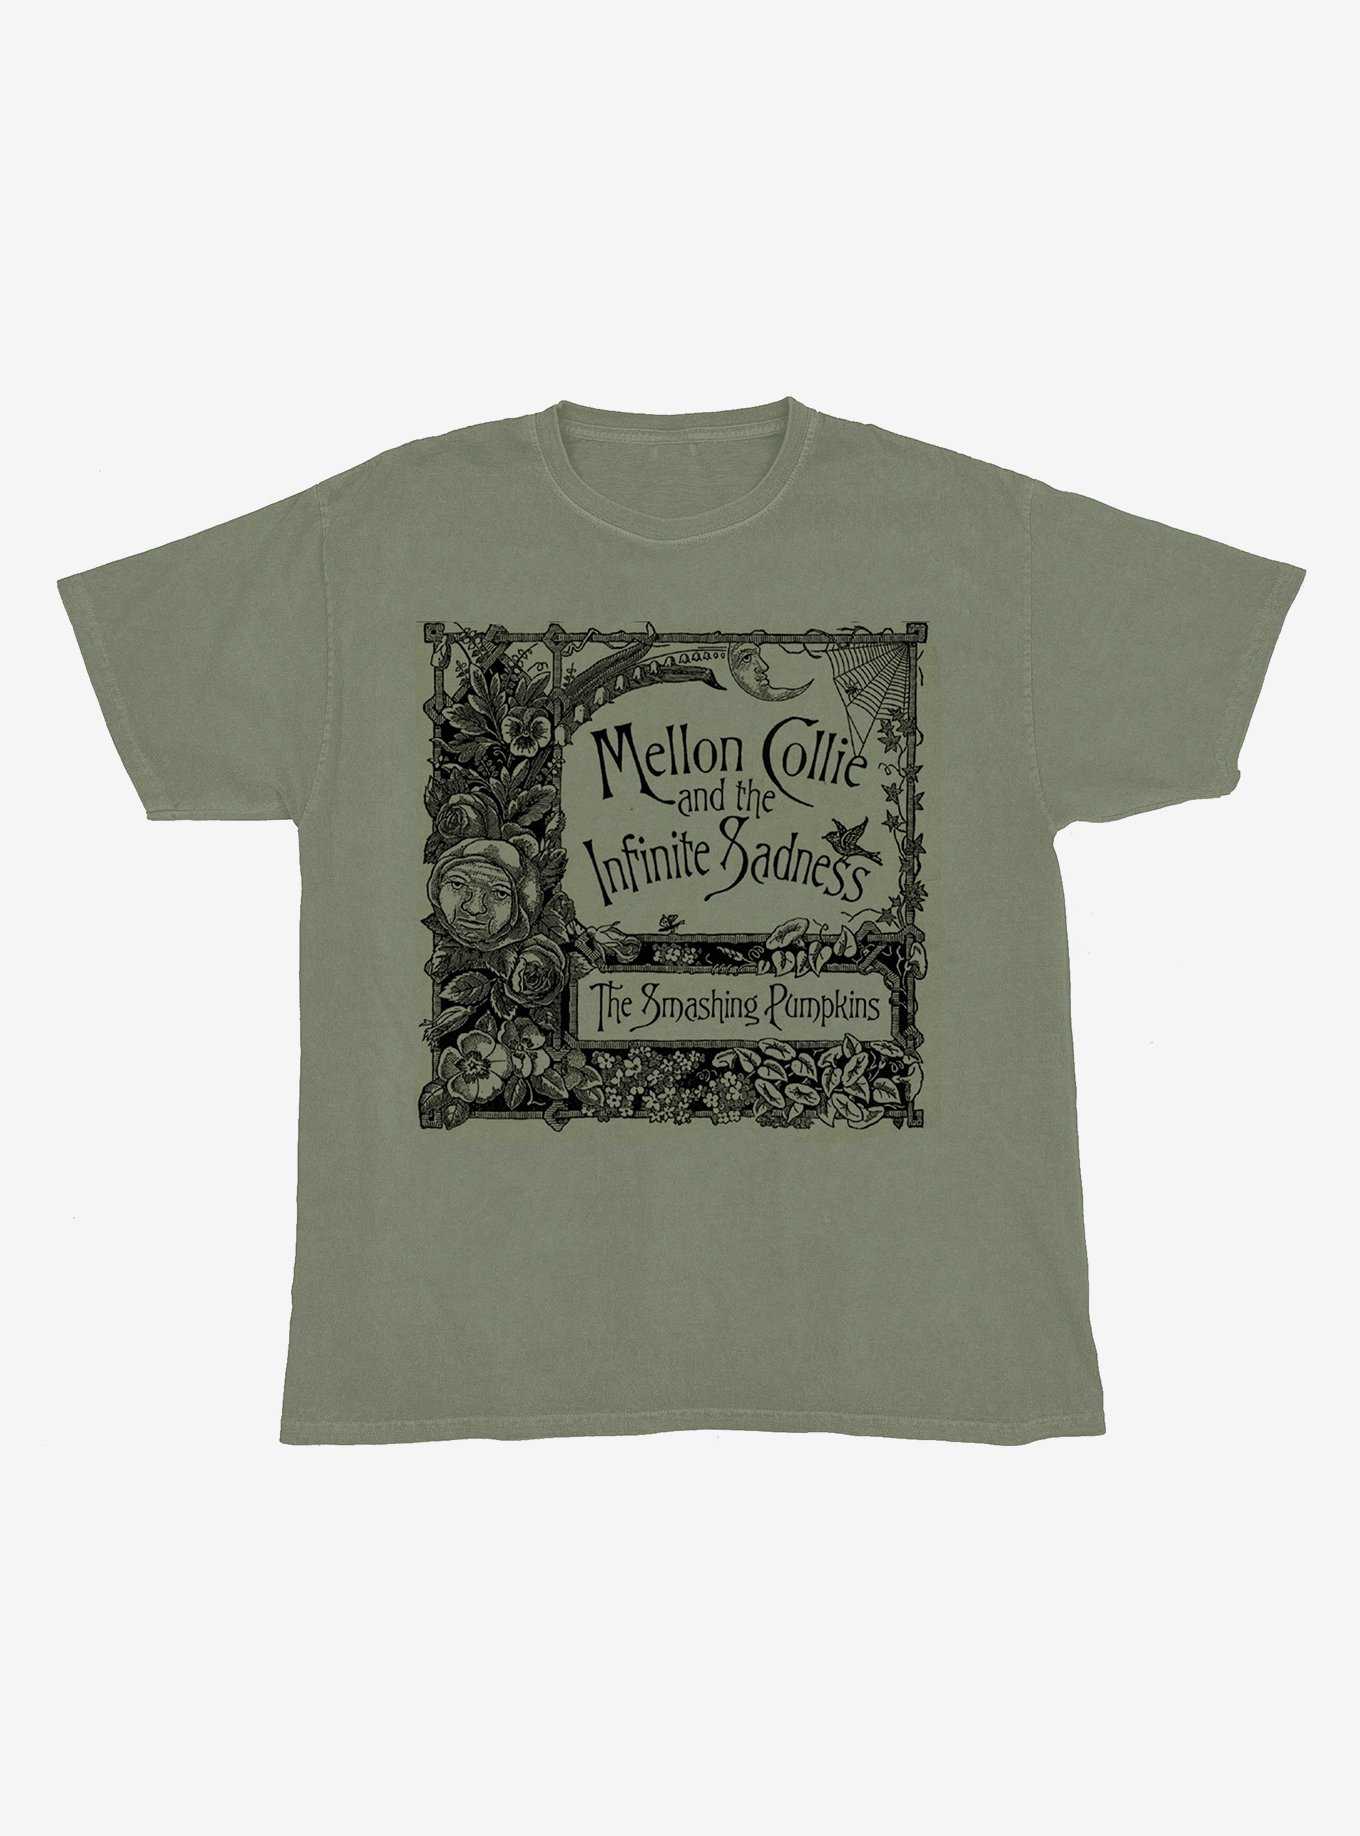 The Smashing Pumpkins Mellon Collie & The Infinite Sadness Baroque Boyfriend Fit Girls T-Shirt, , hi-res